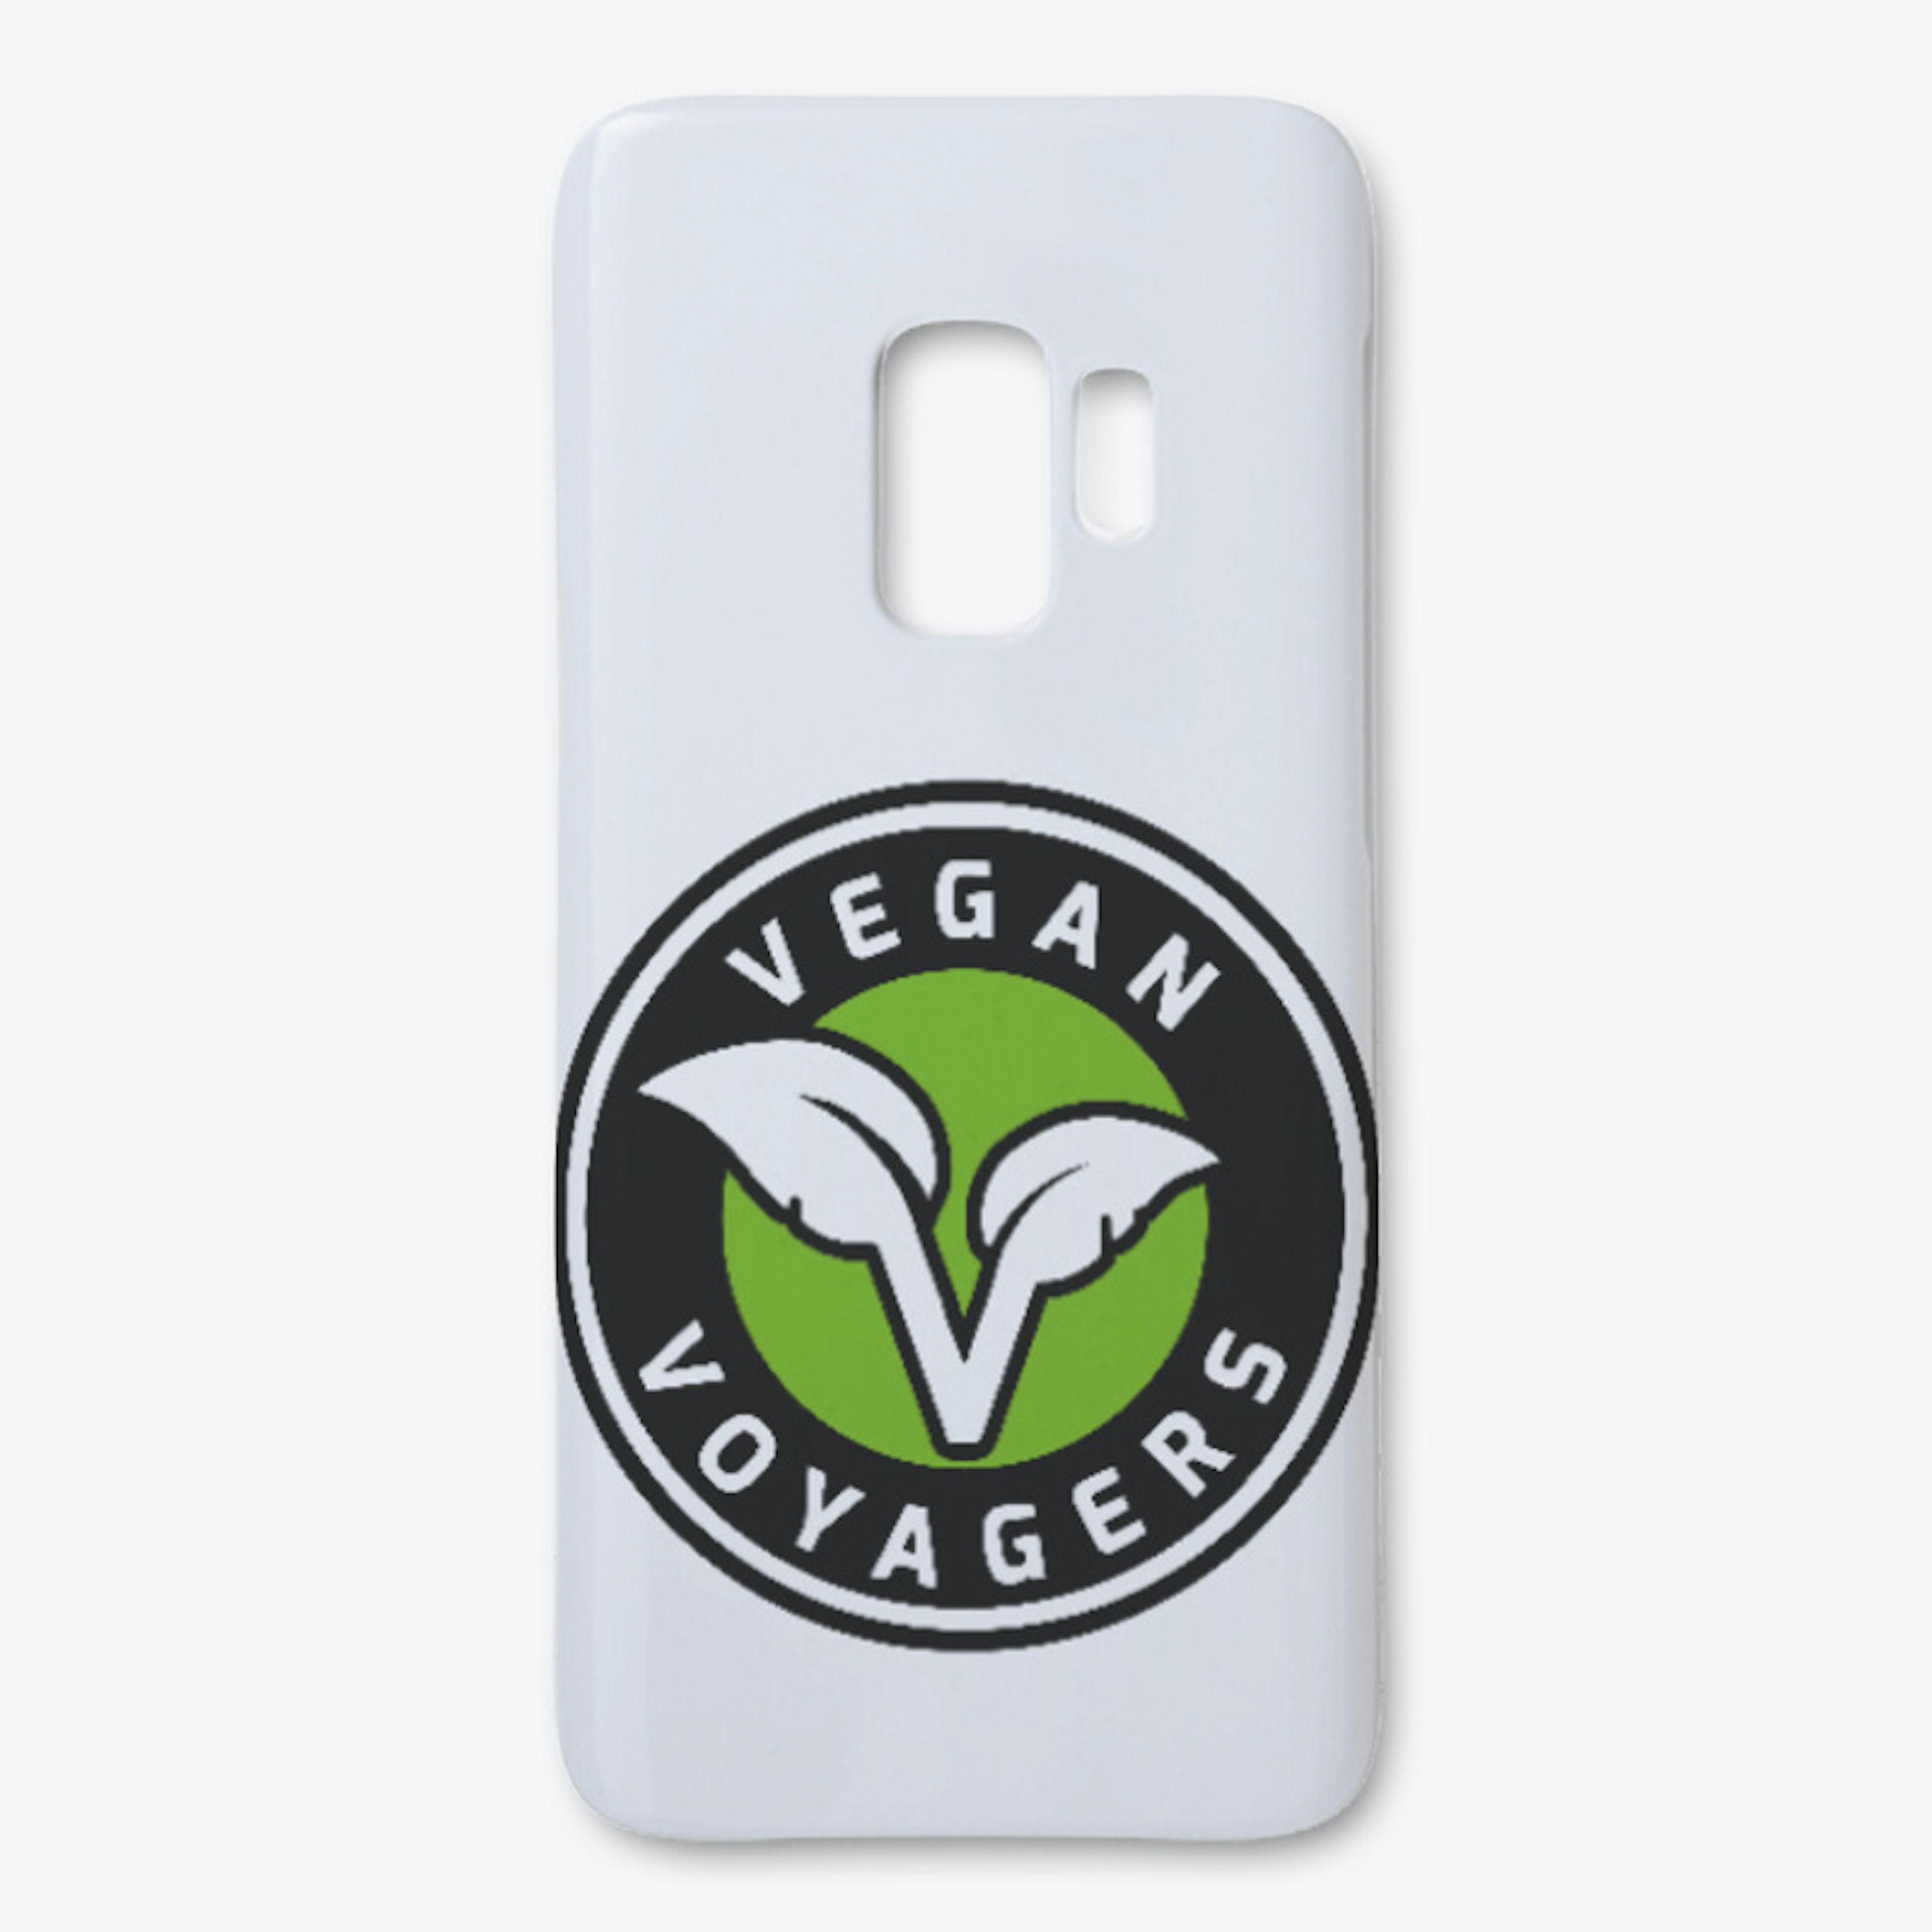 Vegan Voyagers Phone Cases